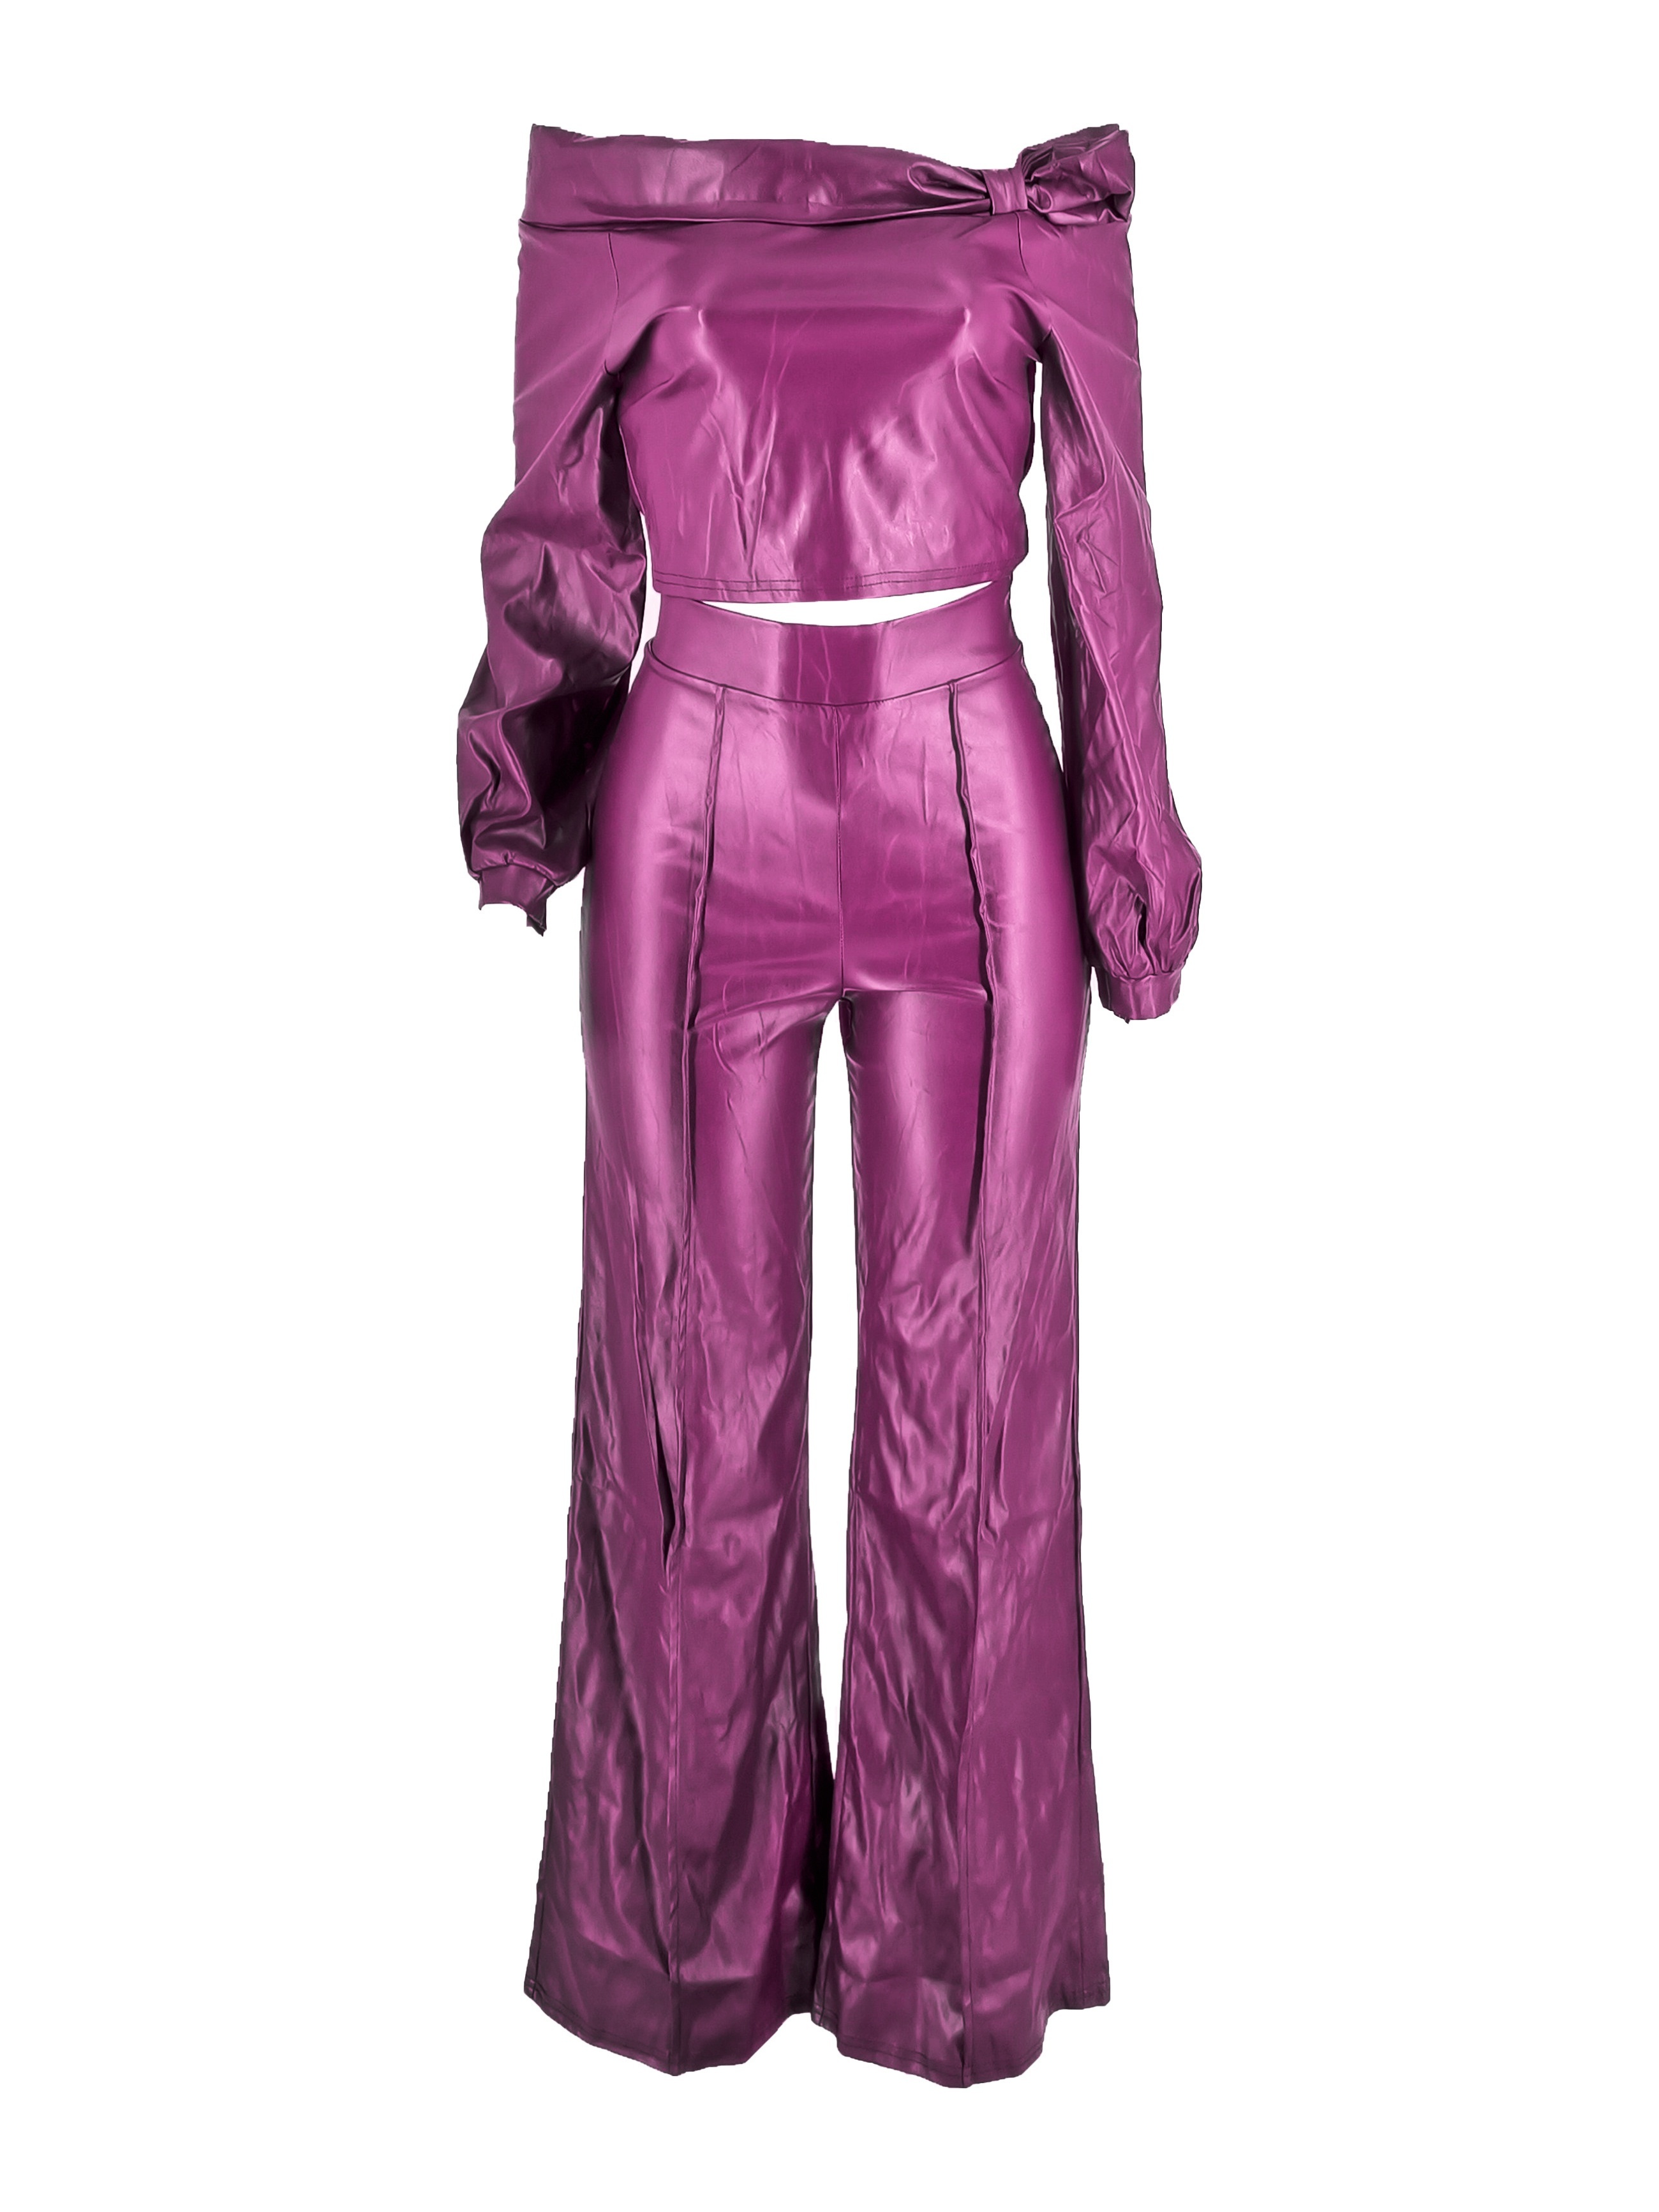 2pc Women Clothing Set Women Modely Off Shoulder Peplum Top Wide Leg Pants  Without Belt, M1784263, Dusty Pink, L : Buy Online at Best Price in KSA -  Souq is now 